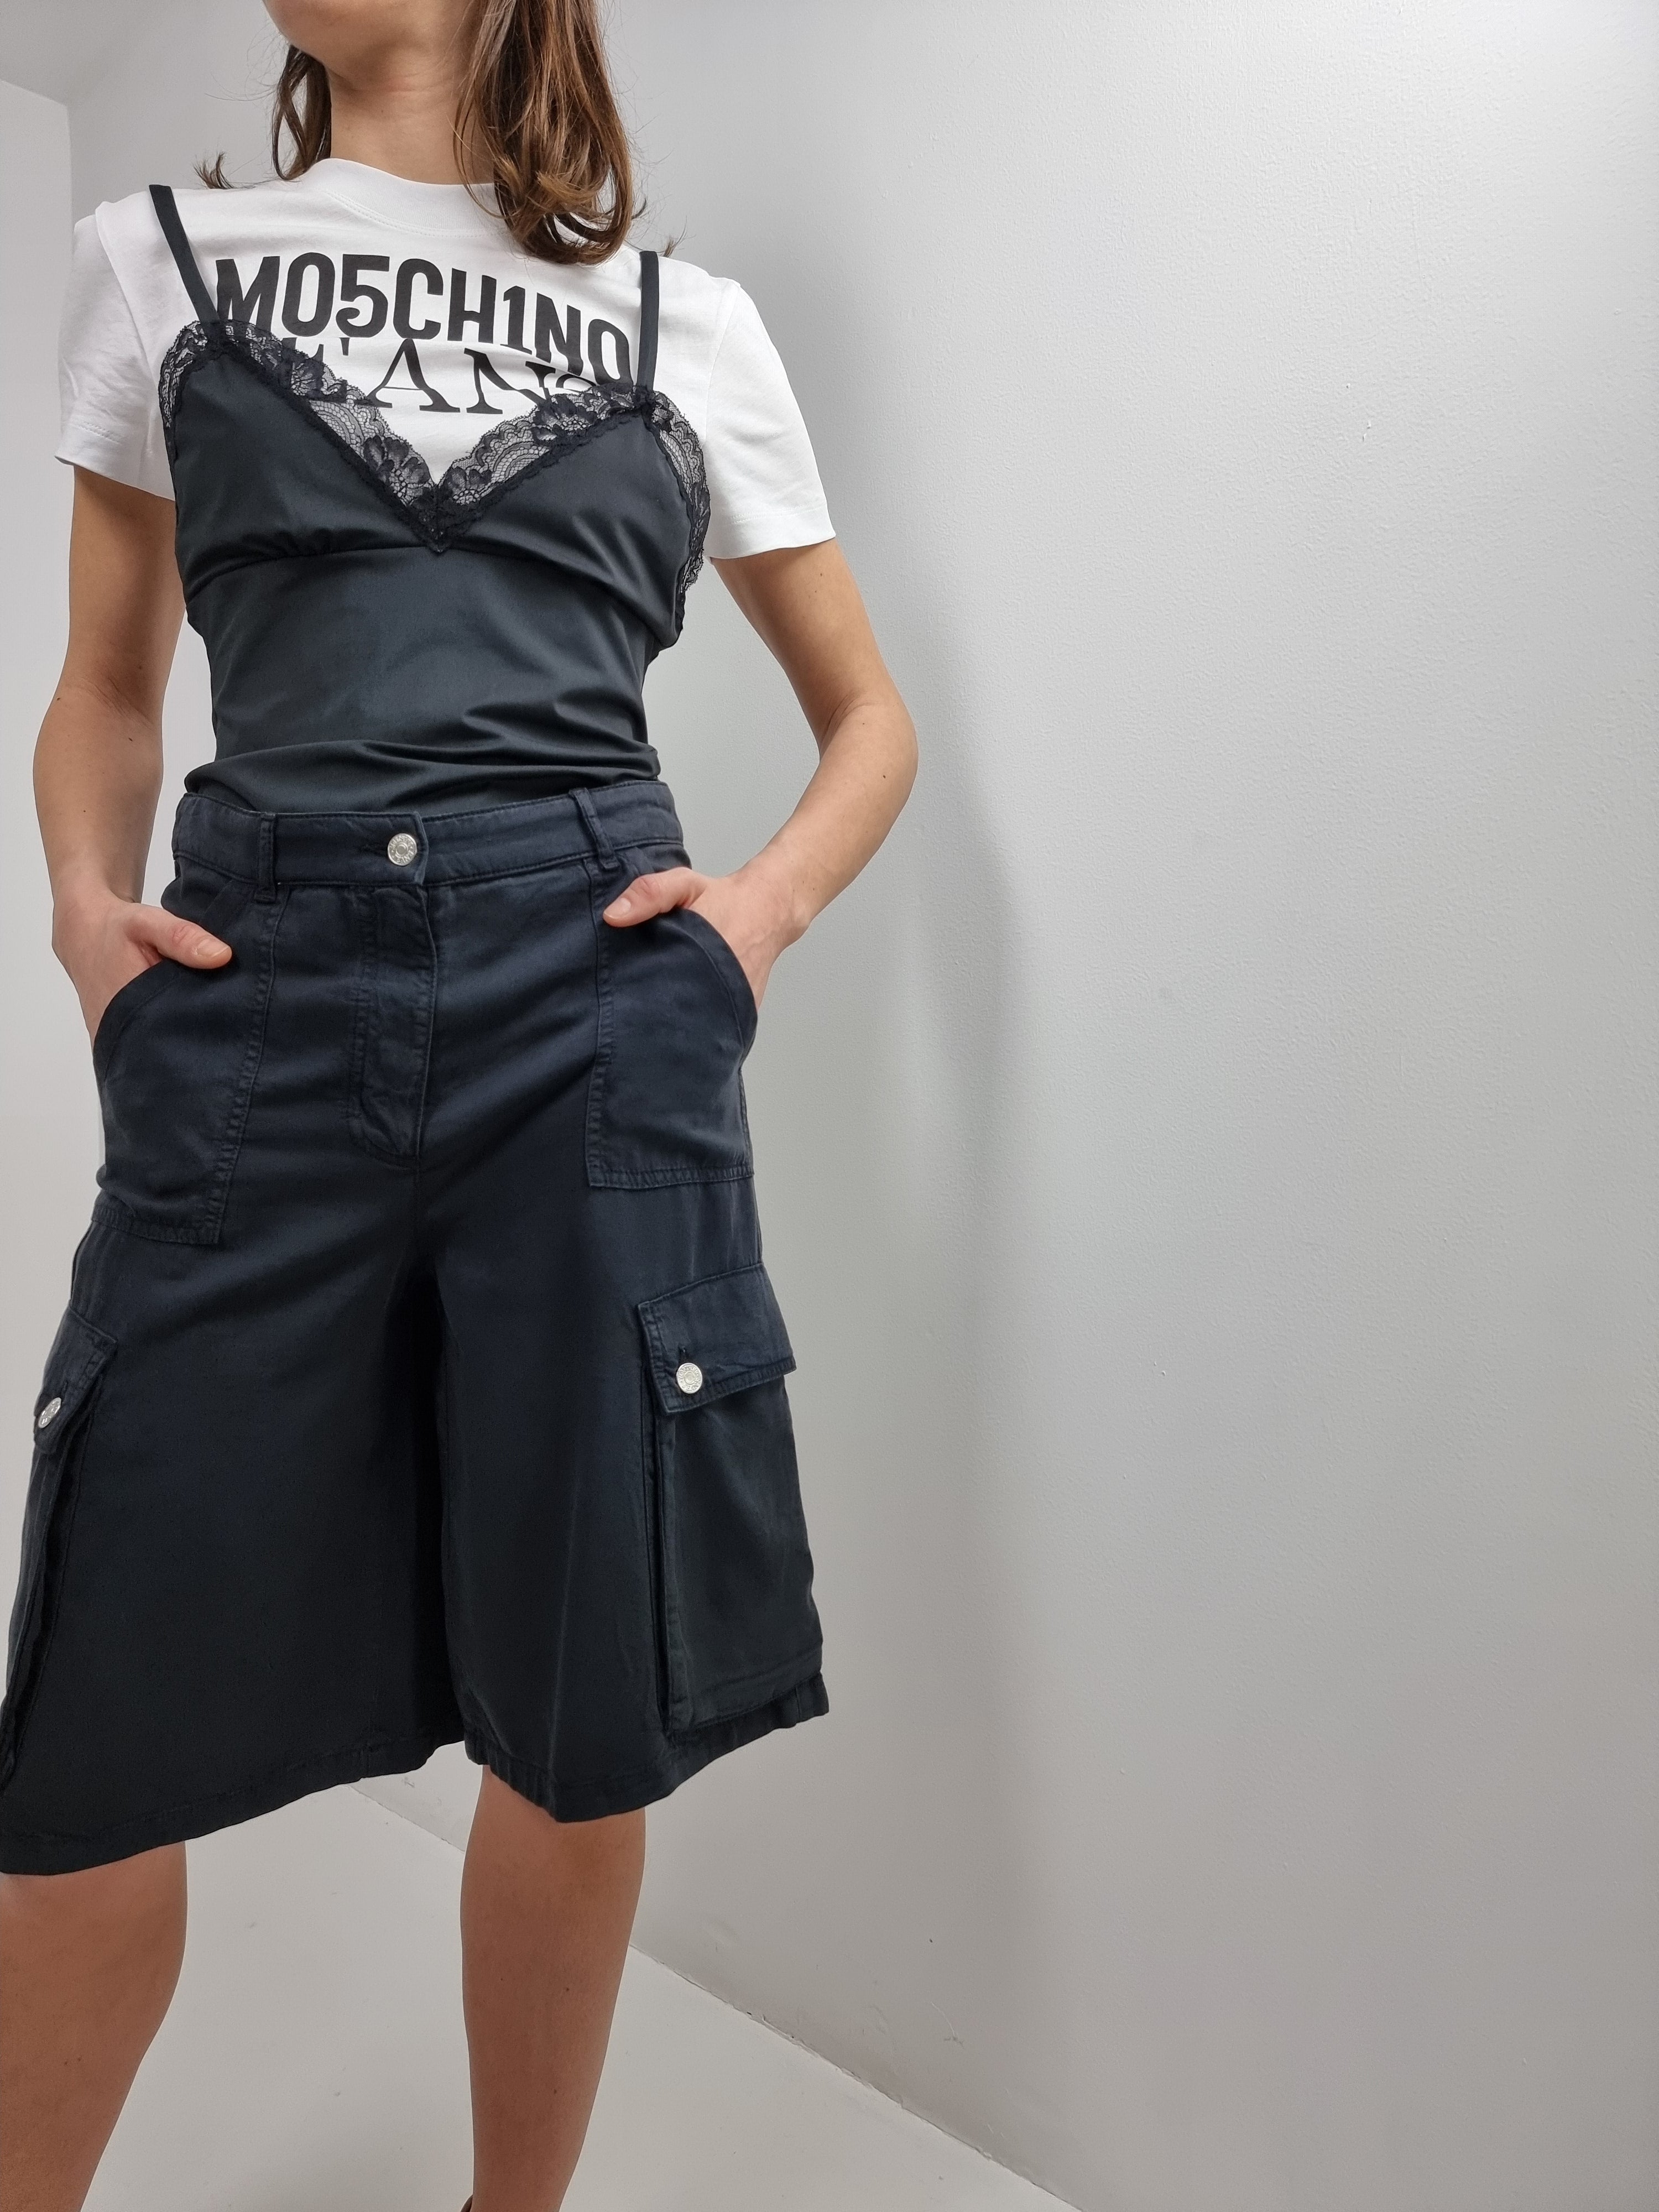 Moschino Jeans – T-shirt con top pizzo nero